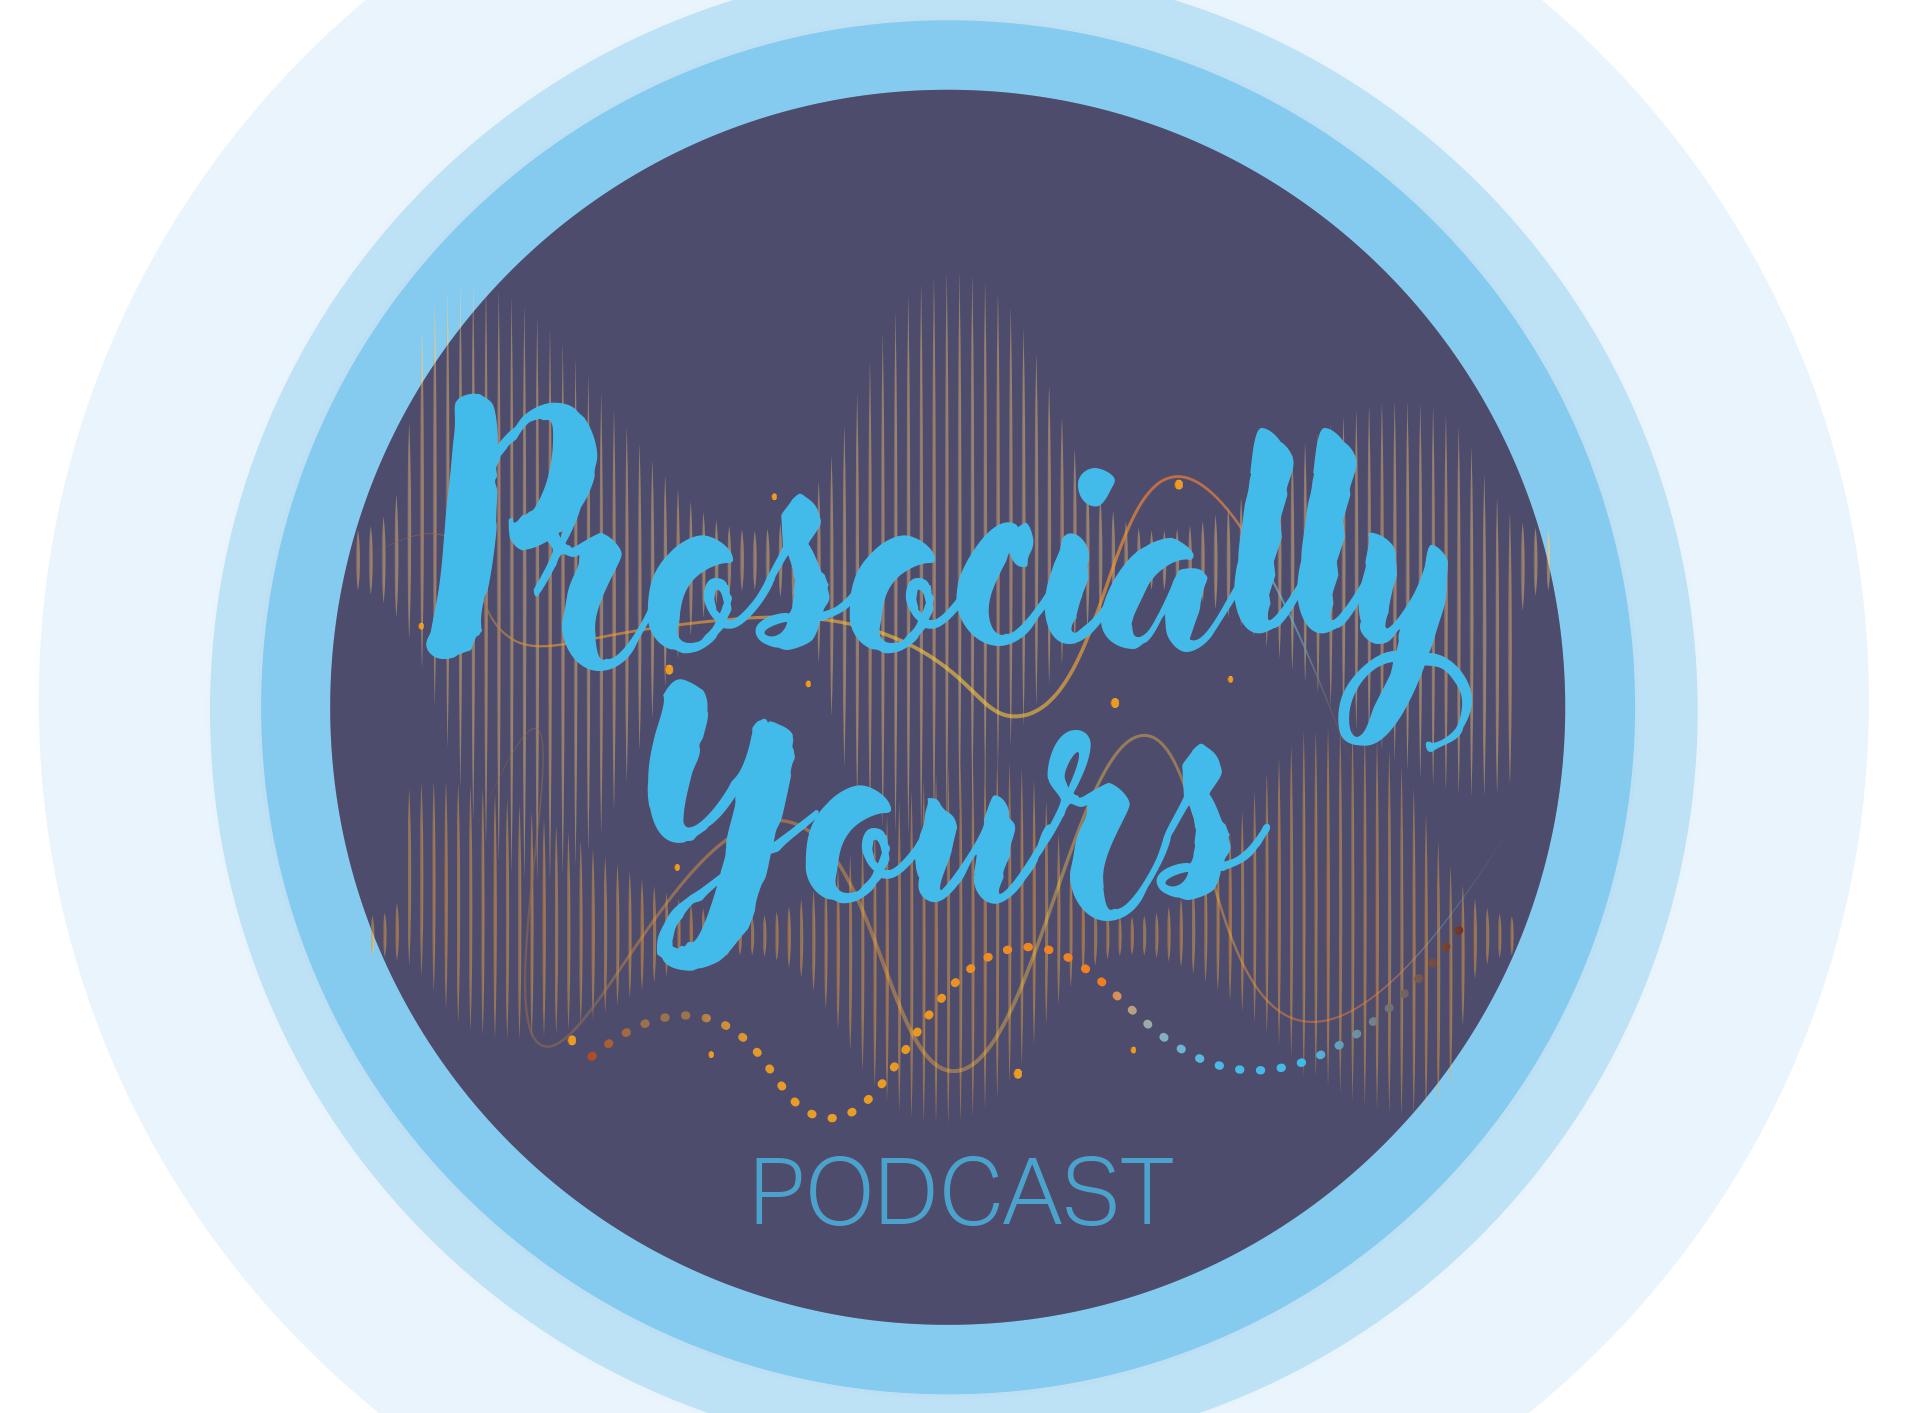 Prosocially Yours podcast logo